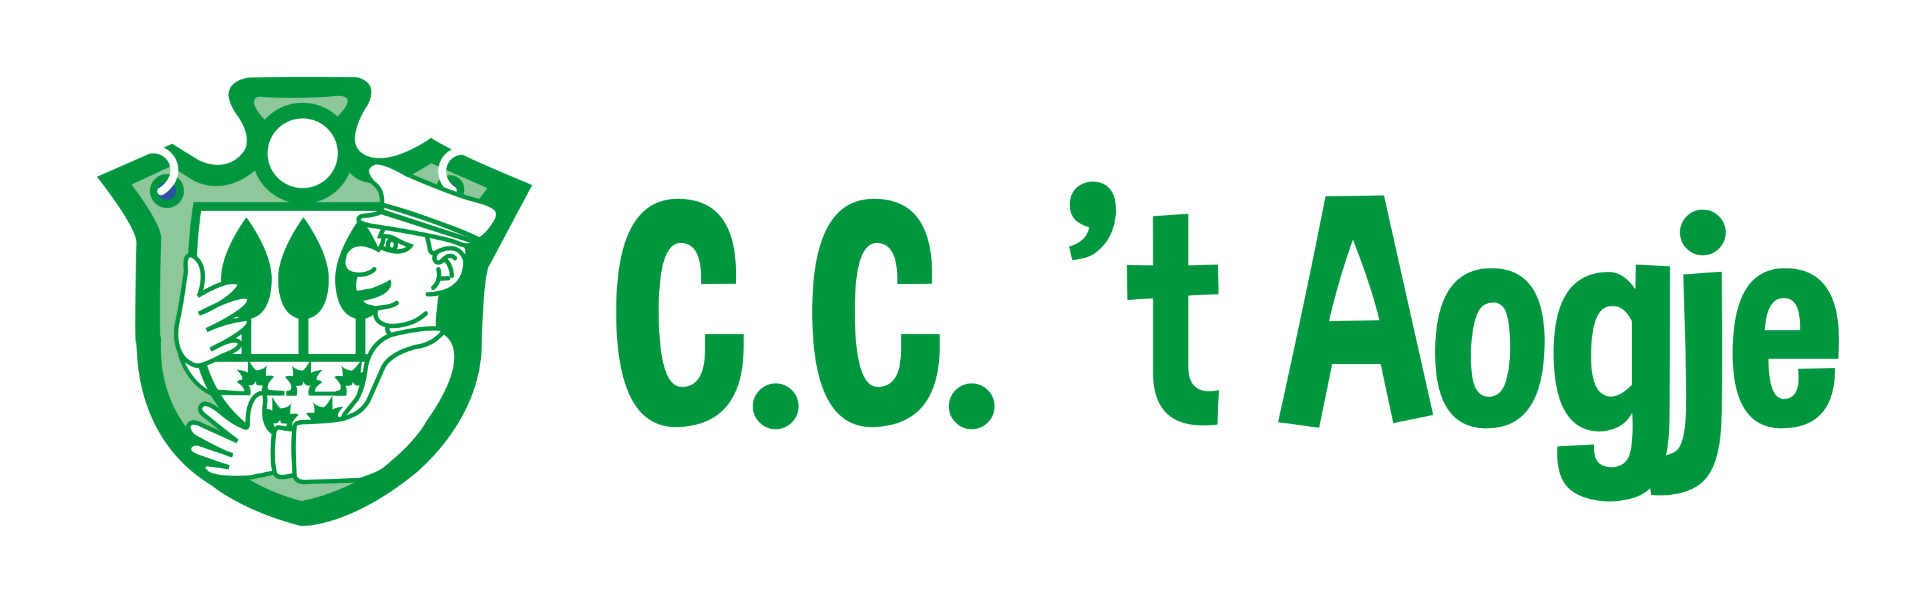 logo_CC